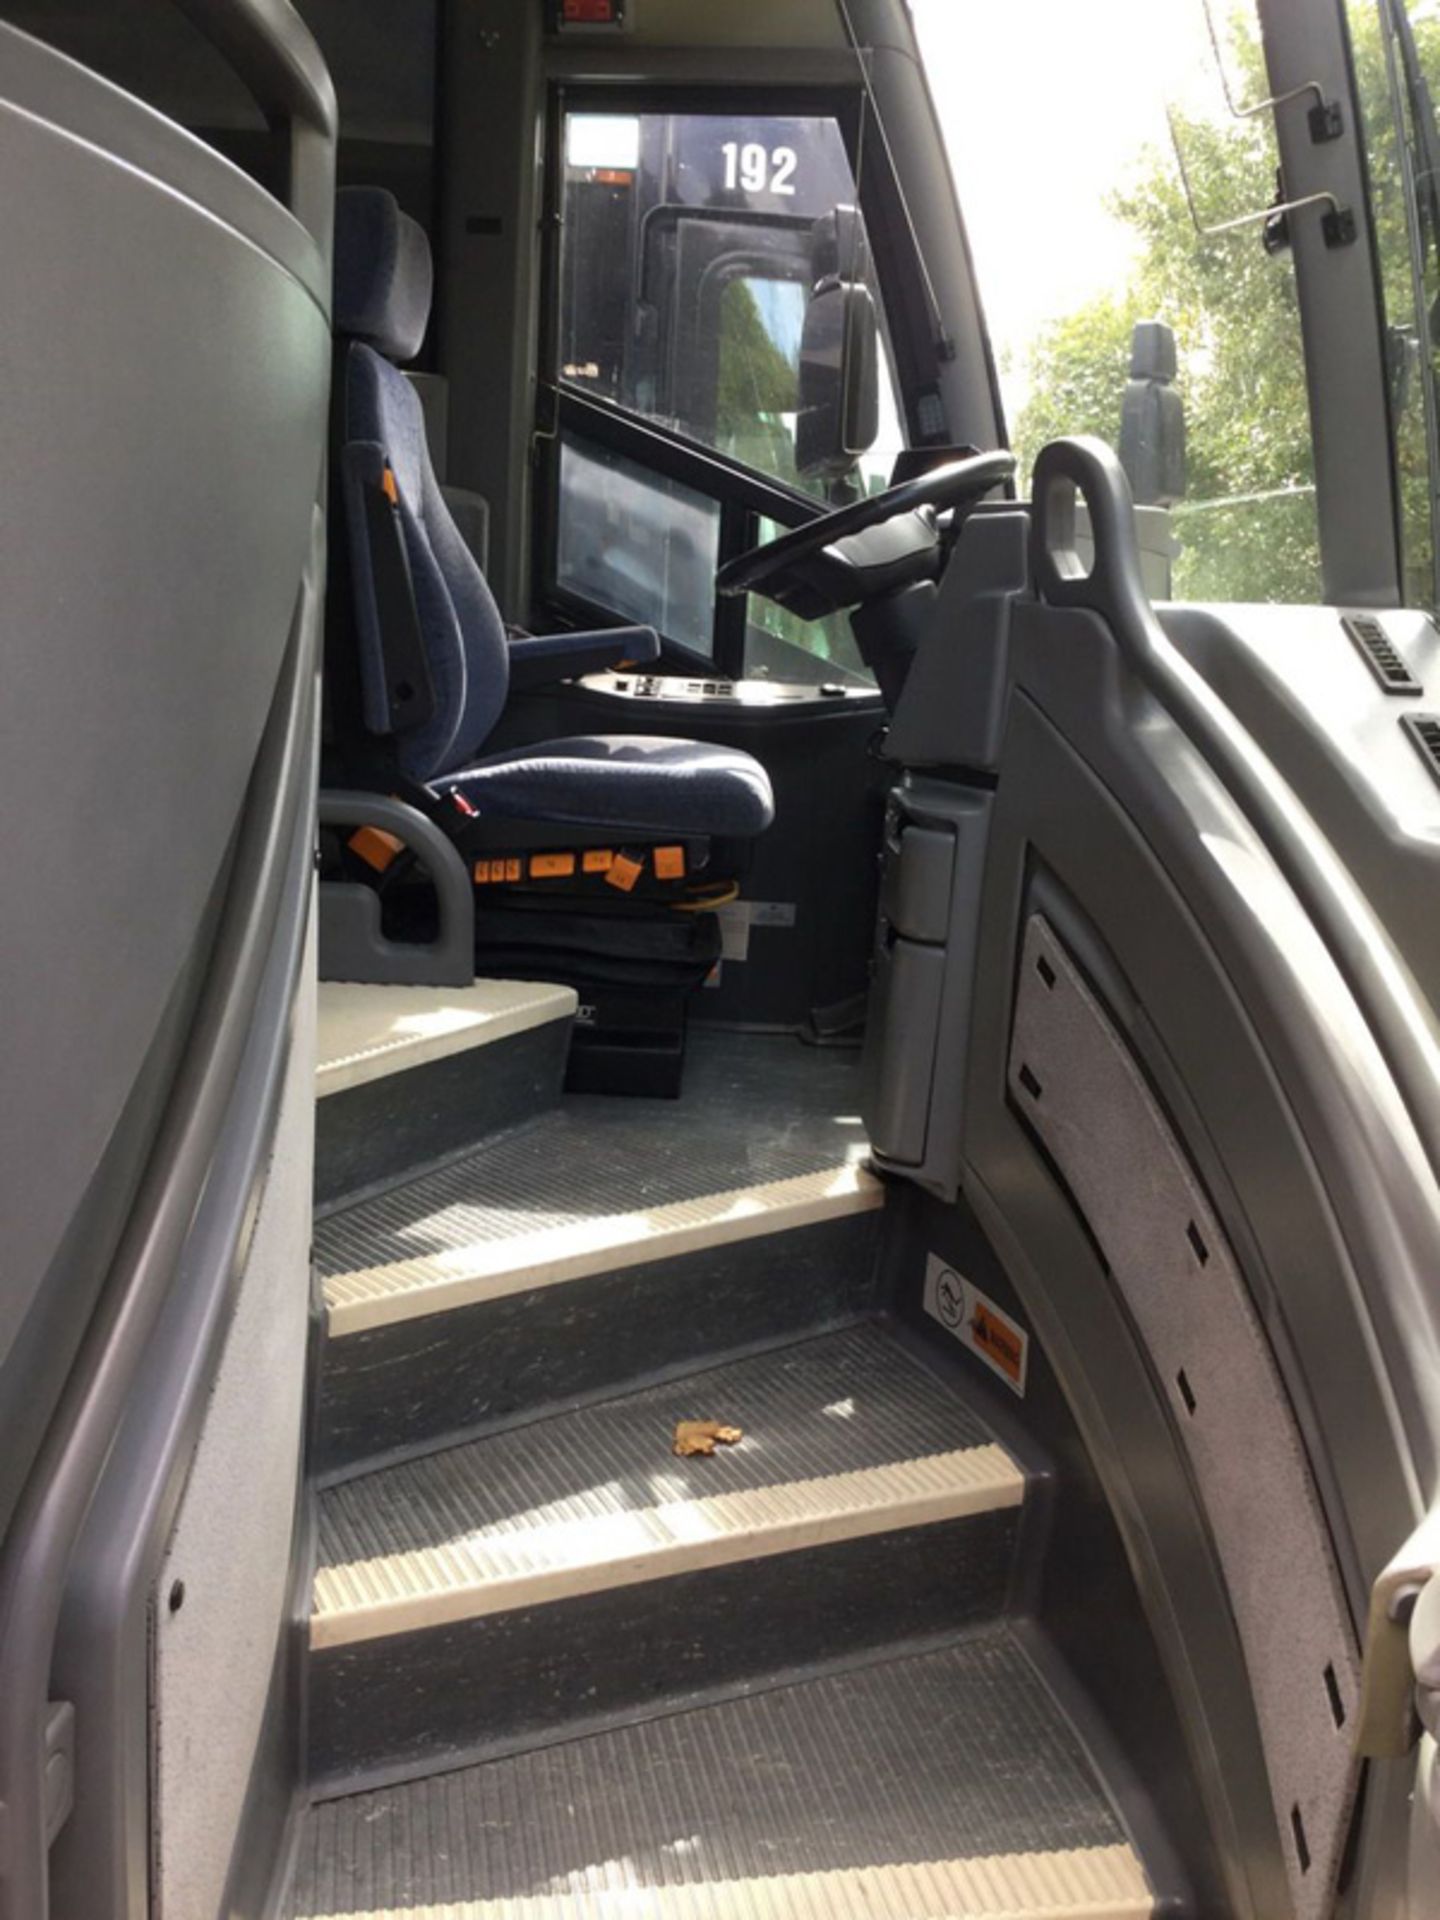 2011 MCI J4500 56-Passenger Charter Bus - Dual Axle, VIN 2MG3JMEA0BW065689, 487,843 Miles (Bus - Bild 6 aus 9